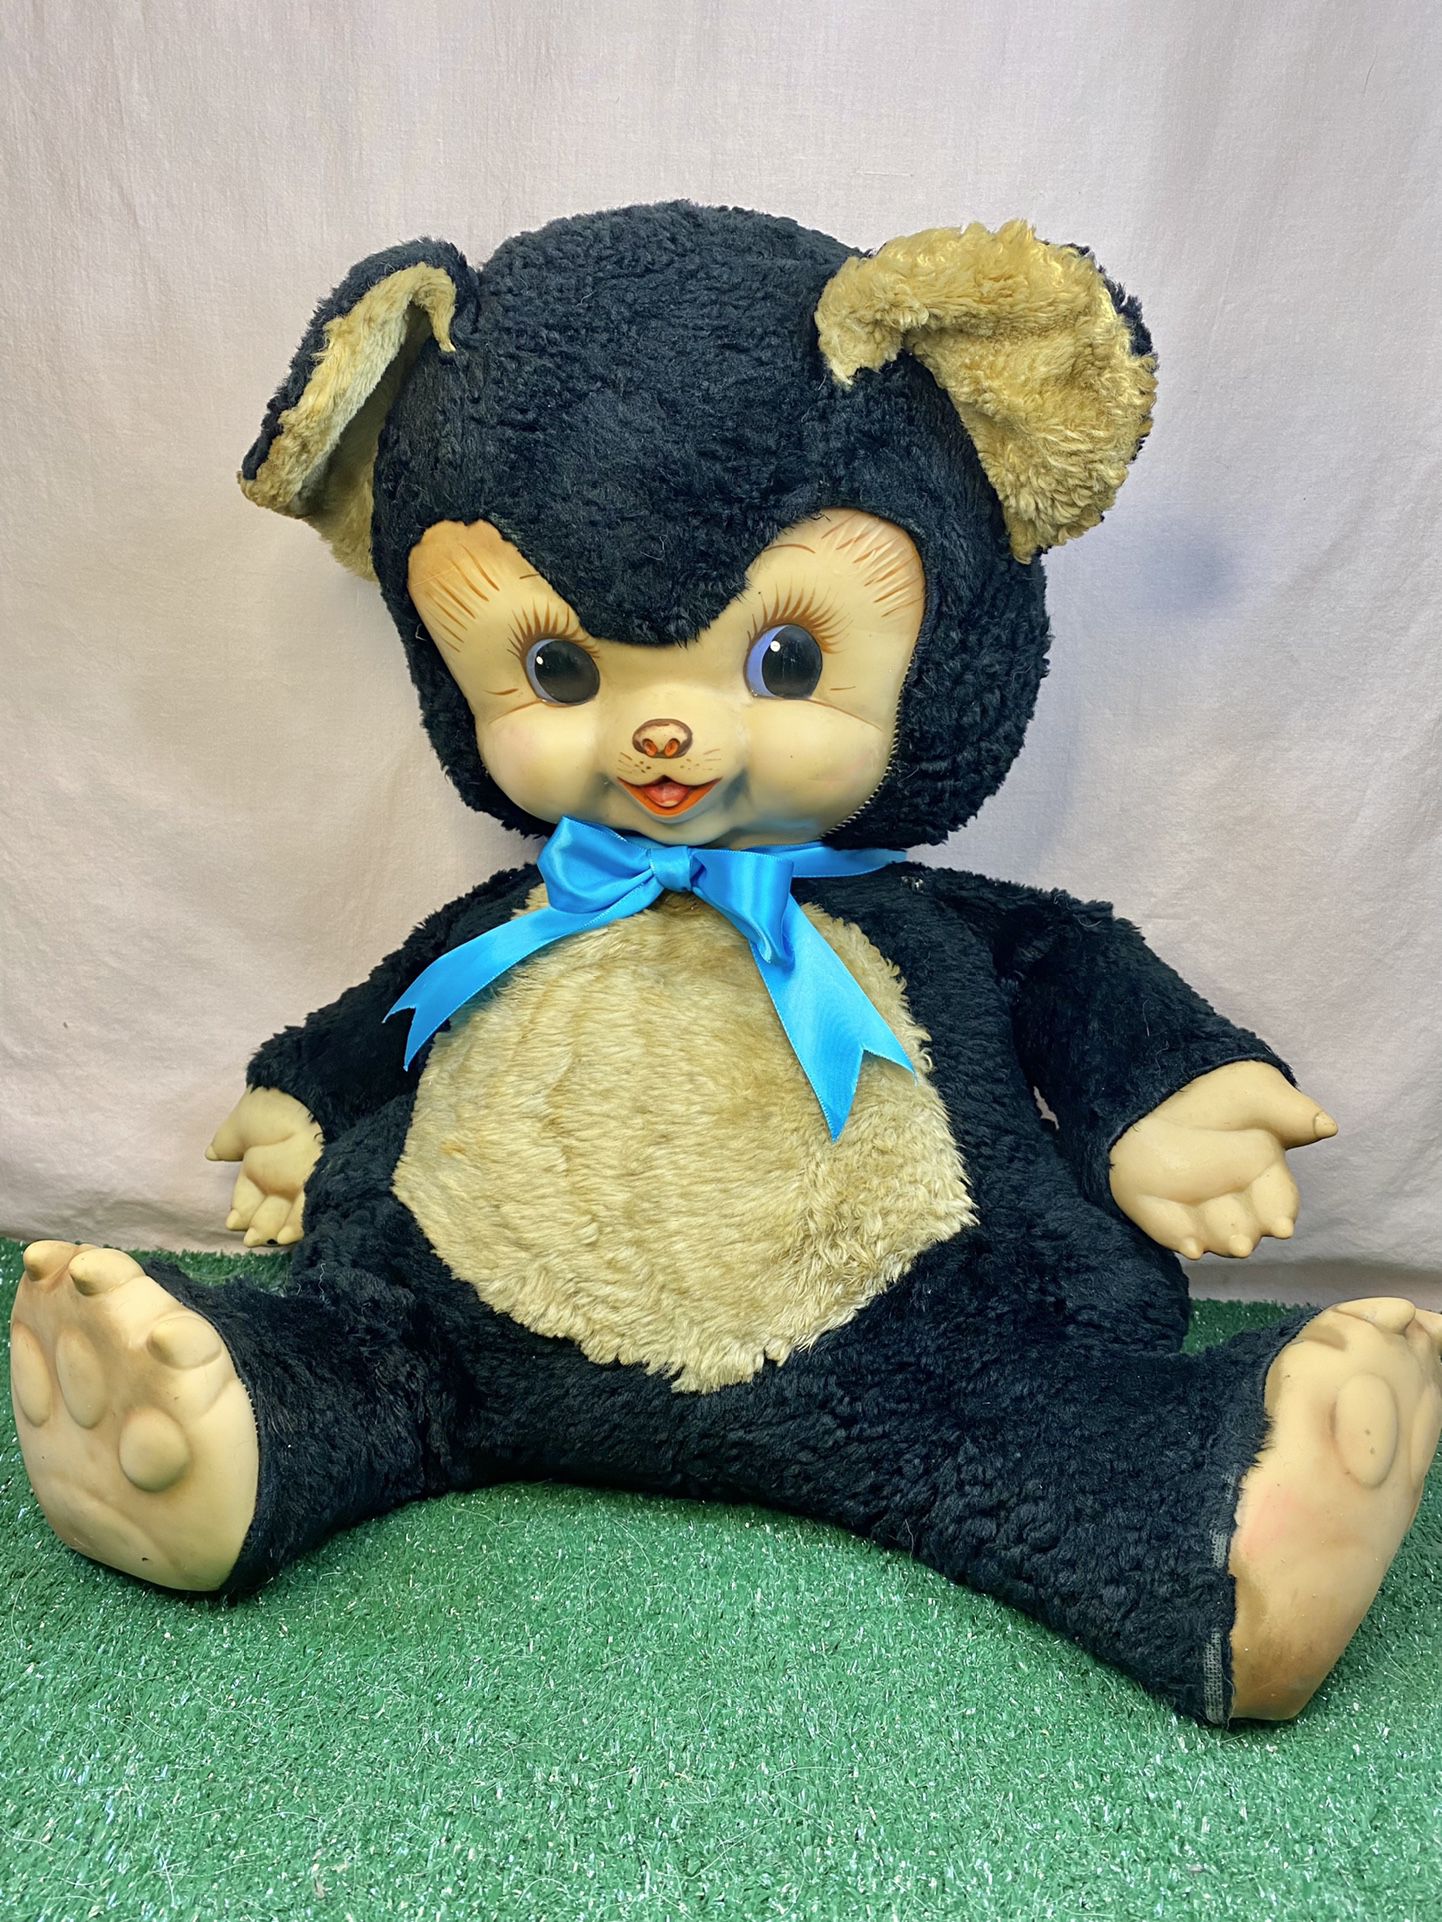 Rare Rushton Chubby Tubby Bear Rubber Face Plush 1950s Original Paint 17in tall